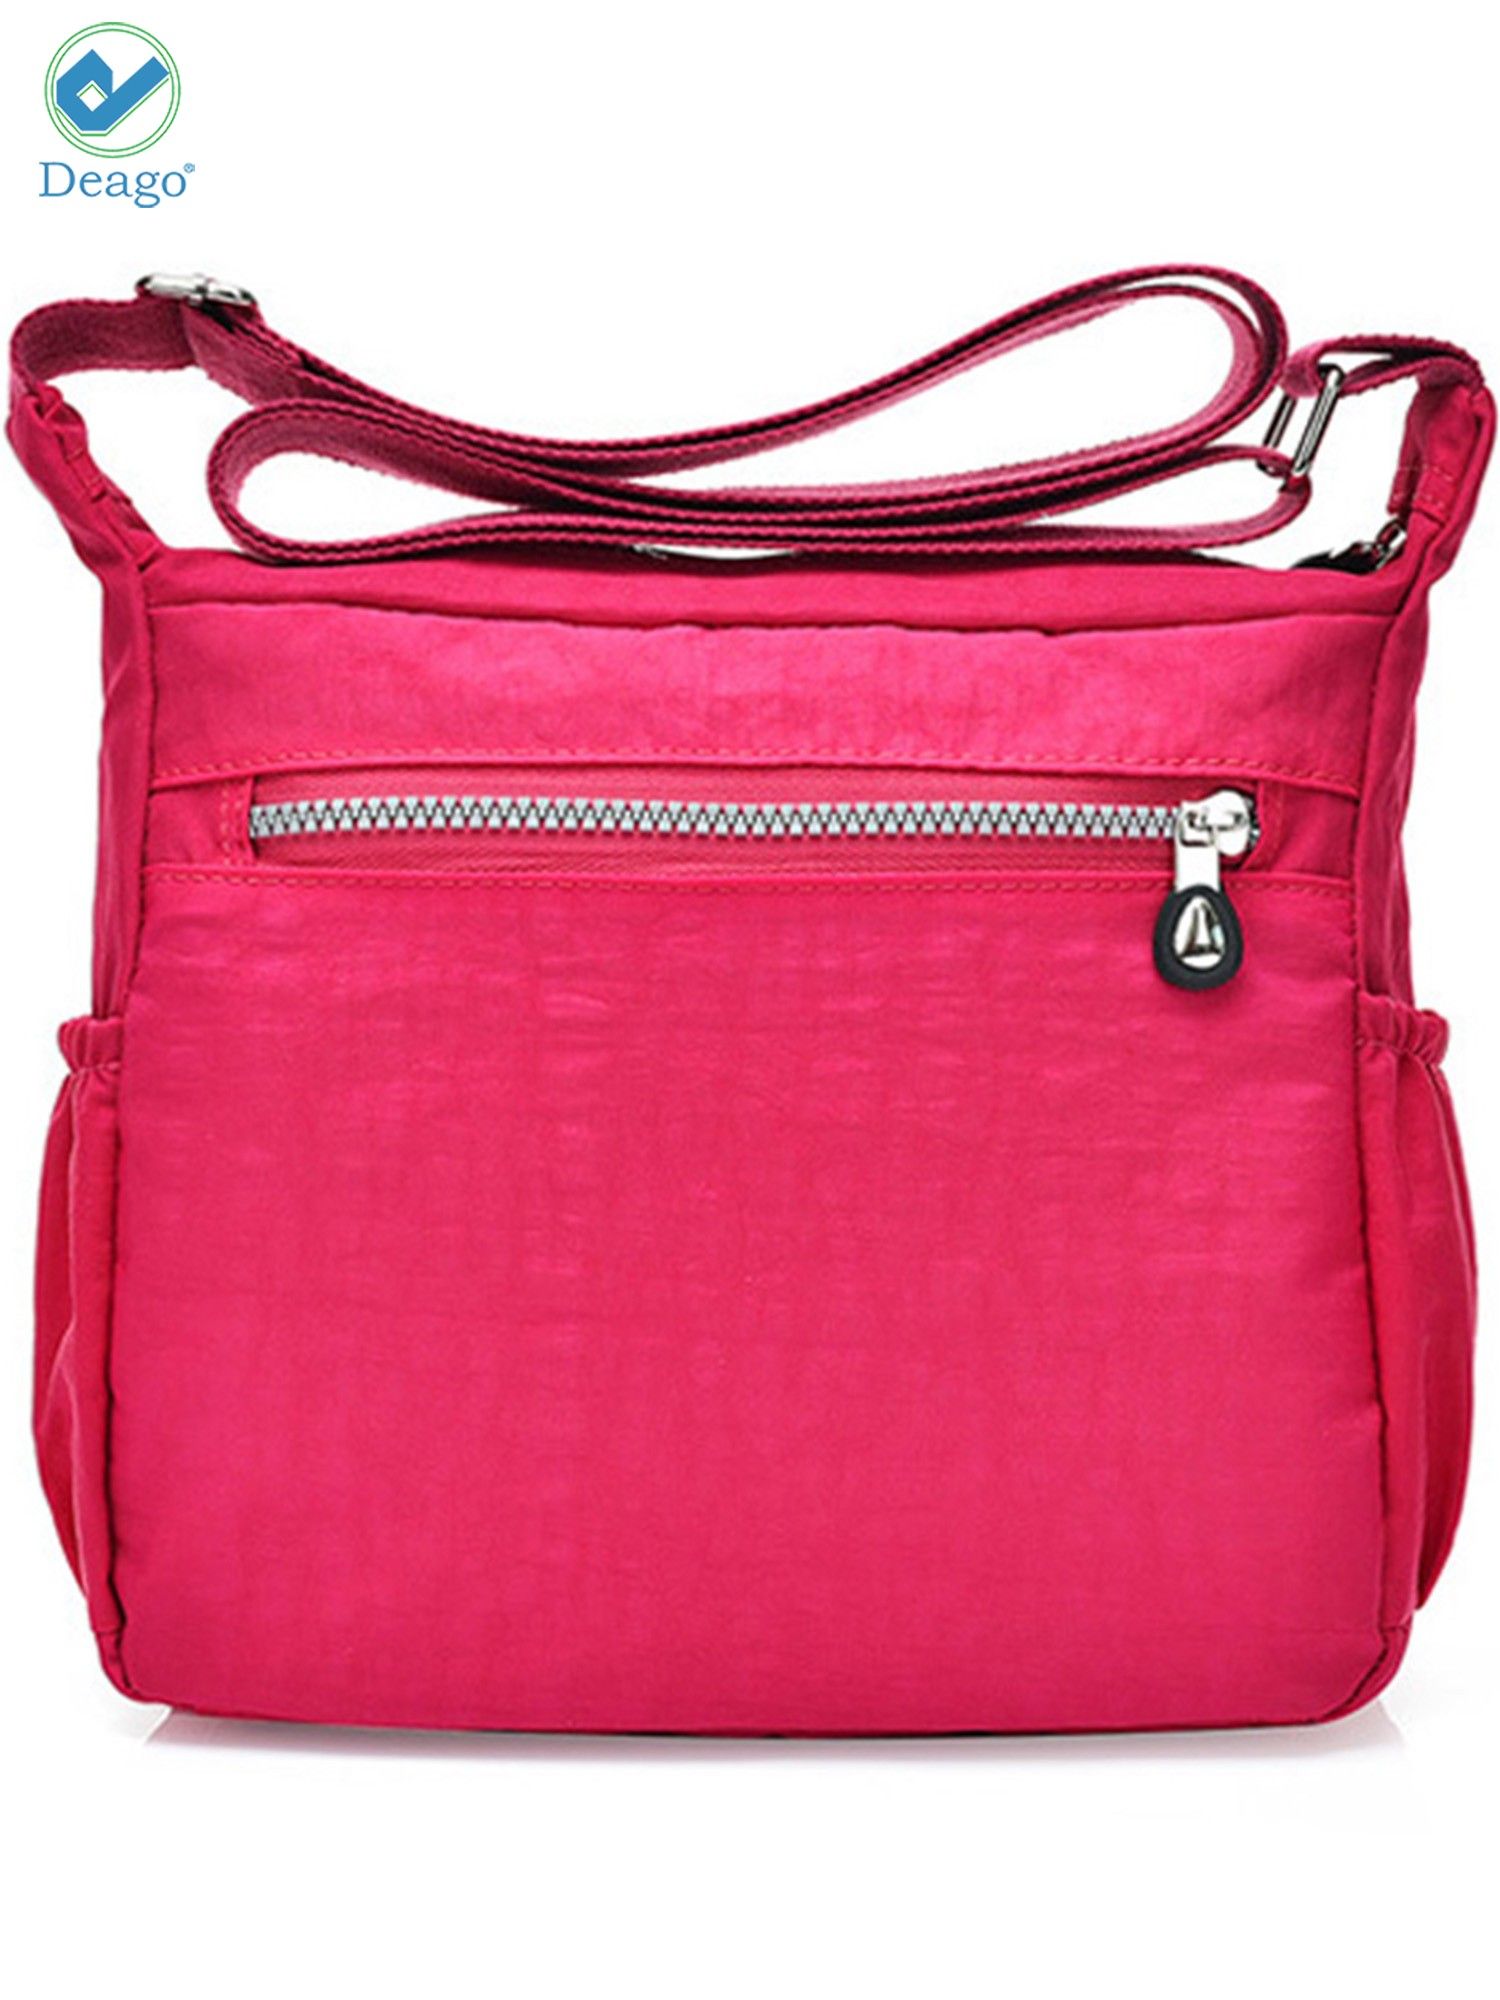 Deago Women's Waterproof Nylon Crossboby Shoulder Bag Casual Messenger Bag Handbag with Multi Pockets (Rose Red) - image 4 of 10